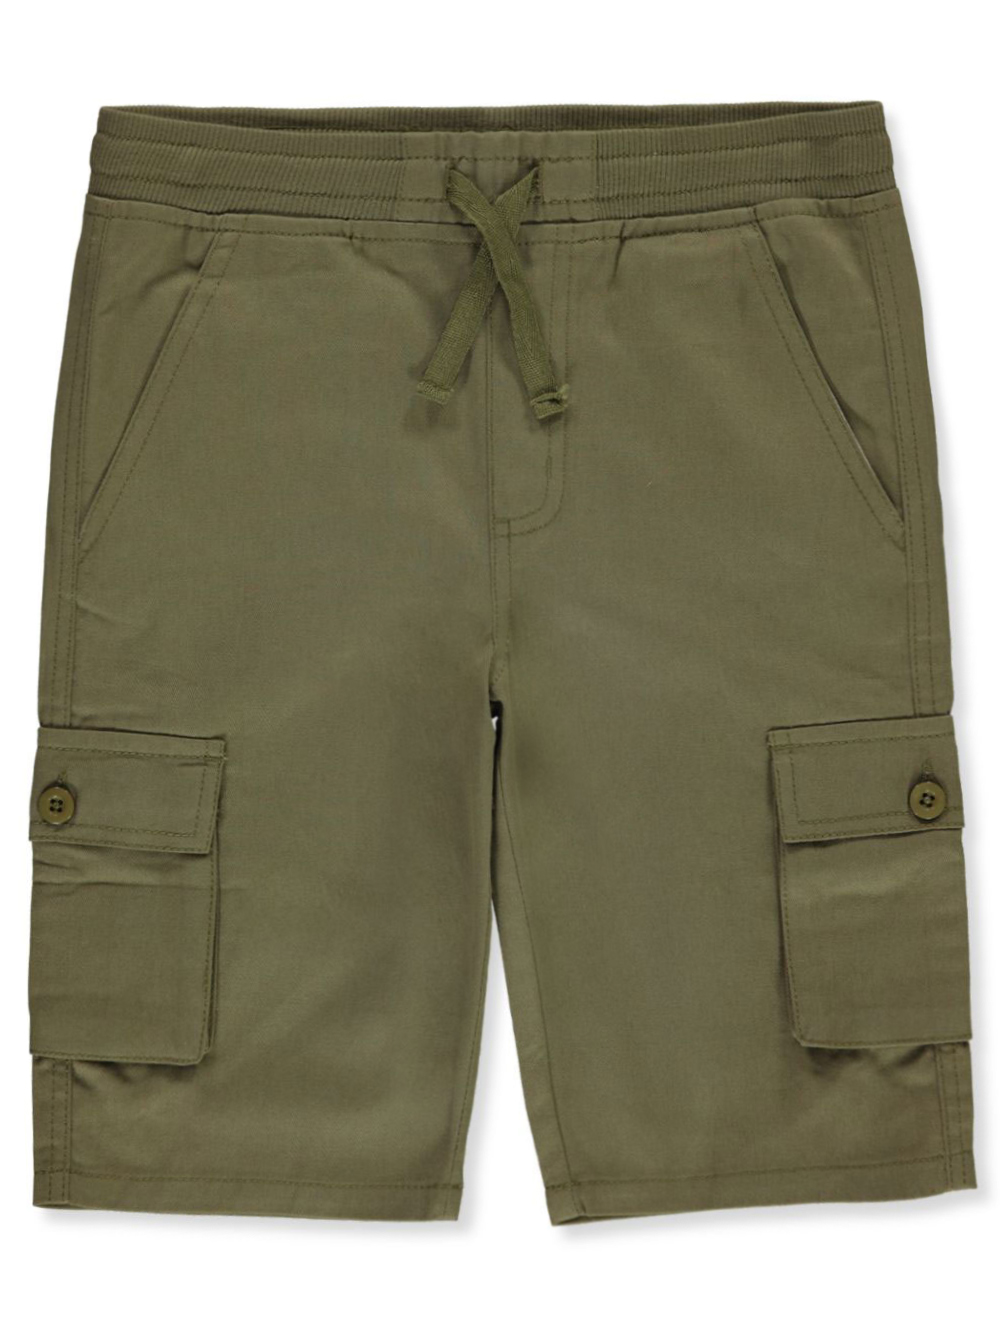 Boys Olive Shorts